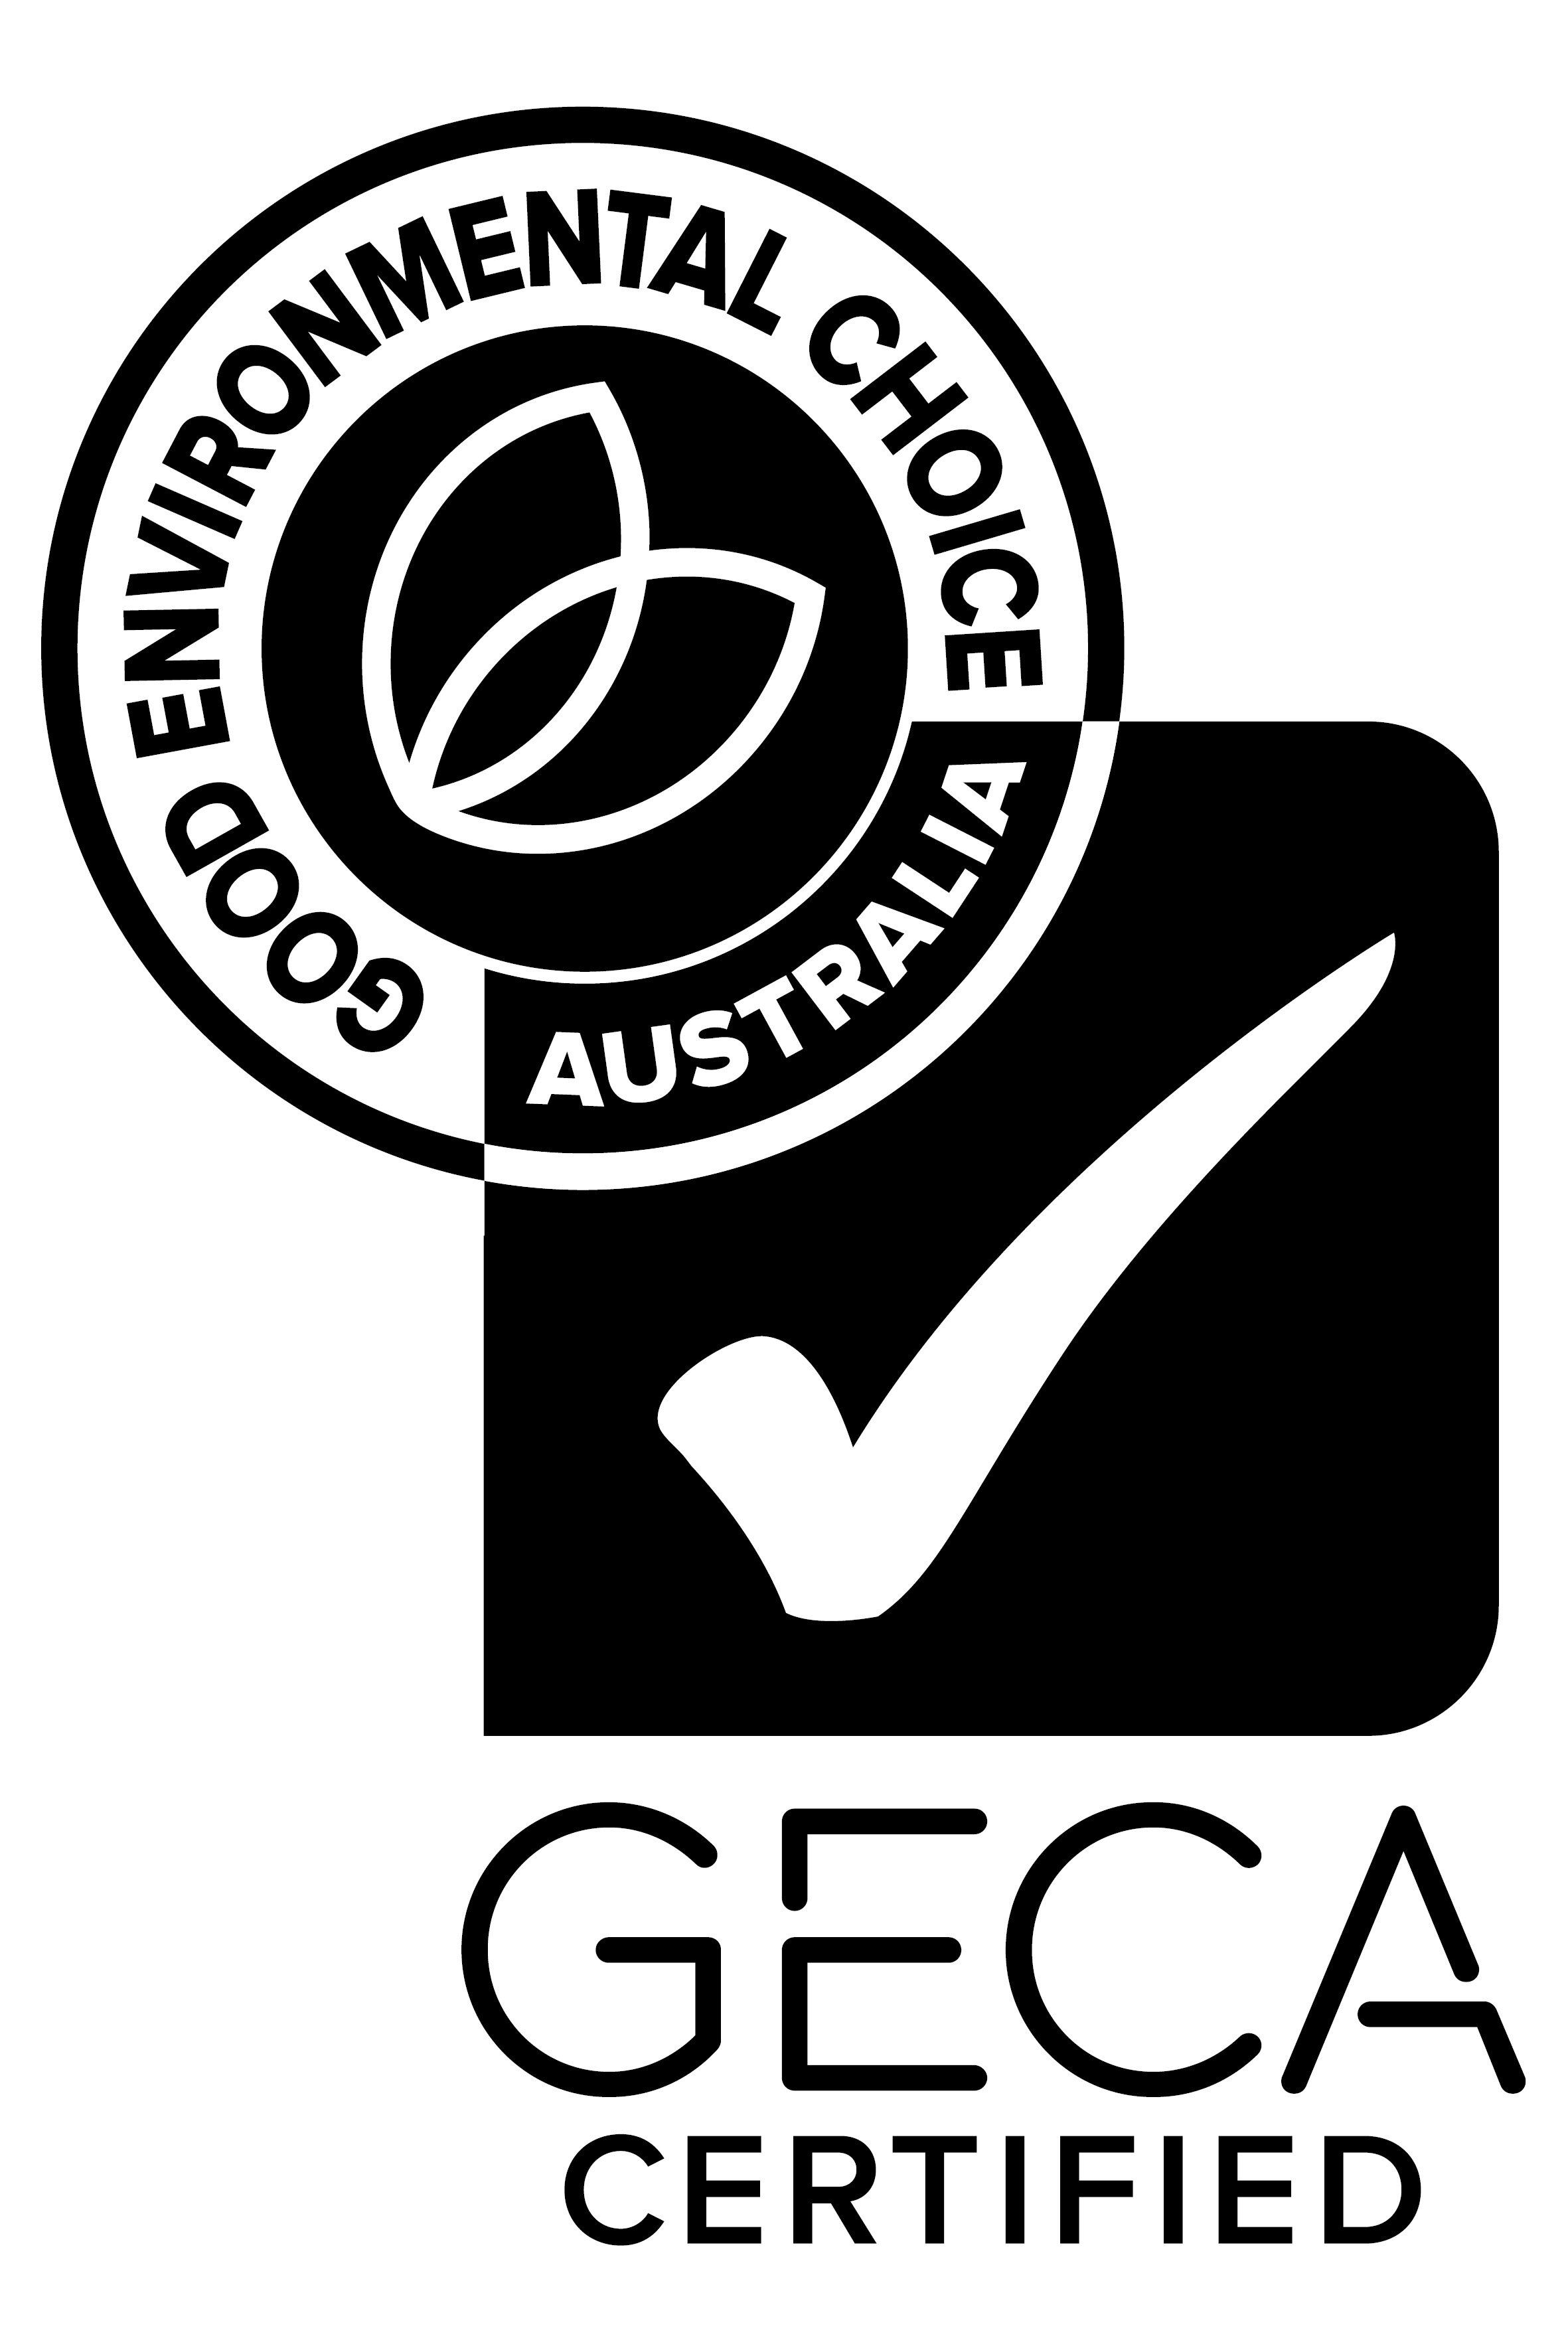 GECA certified Black & White Jpeg.jpg